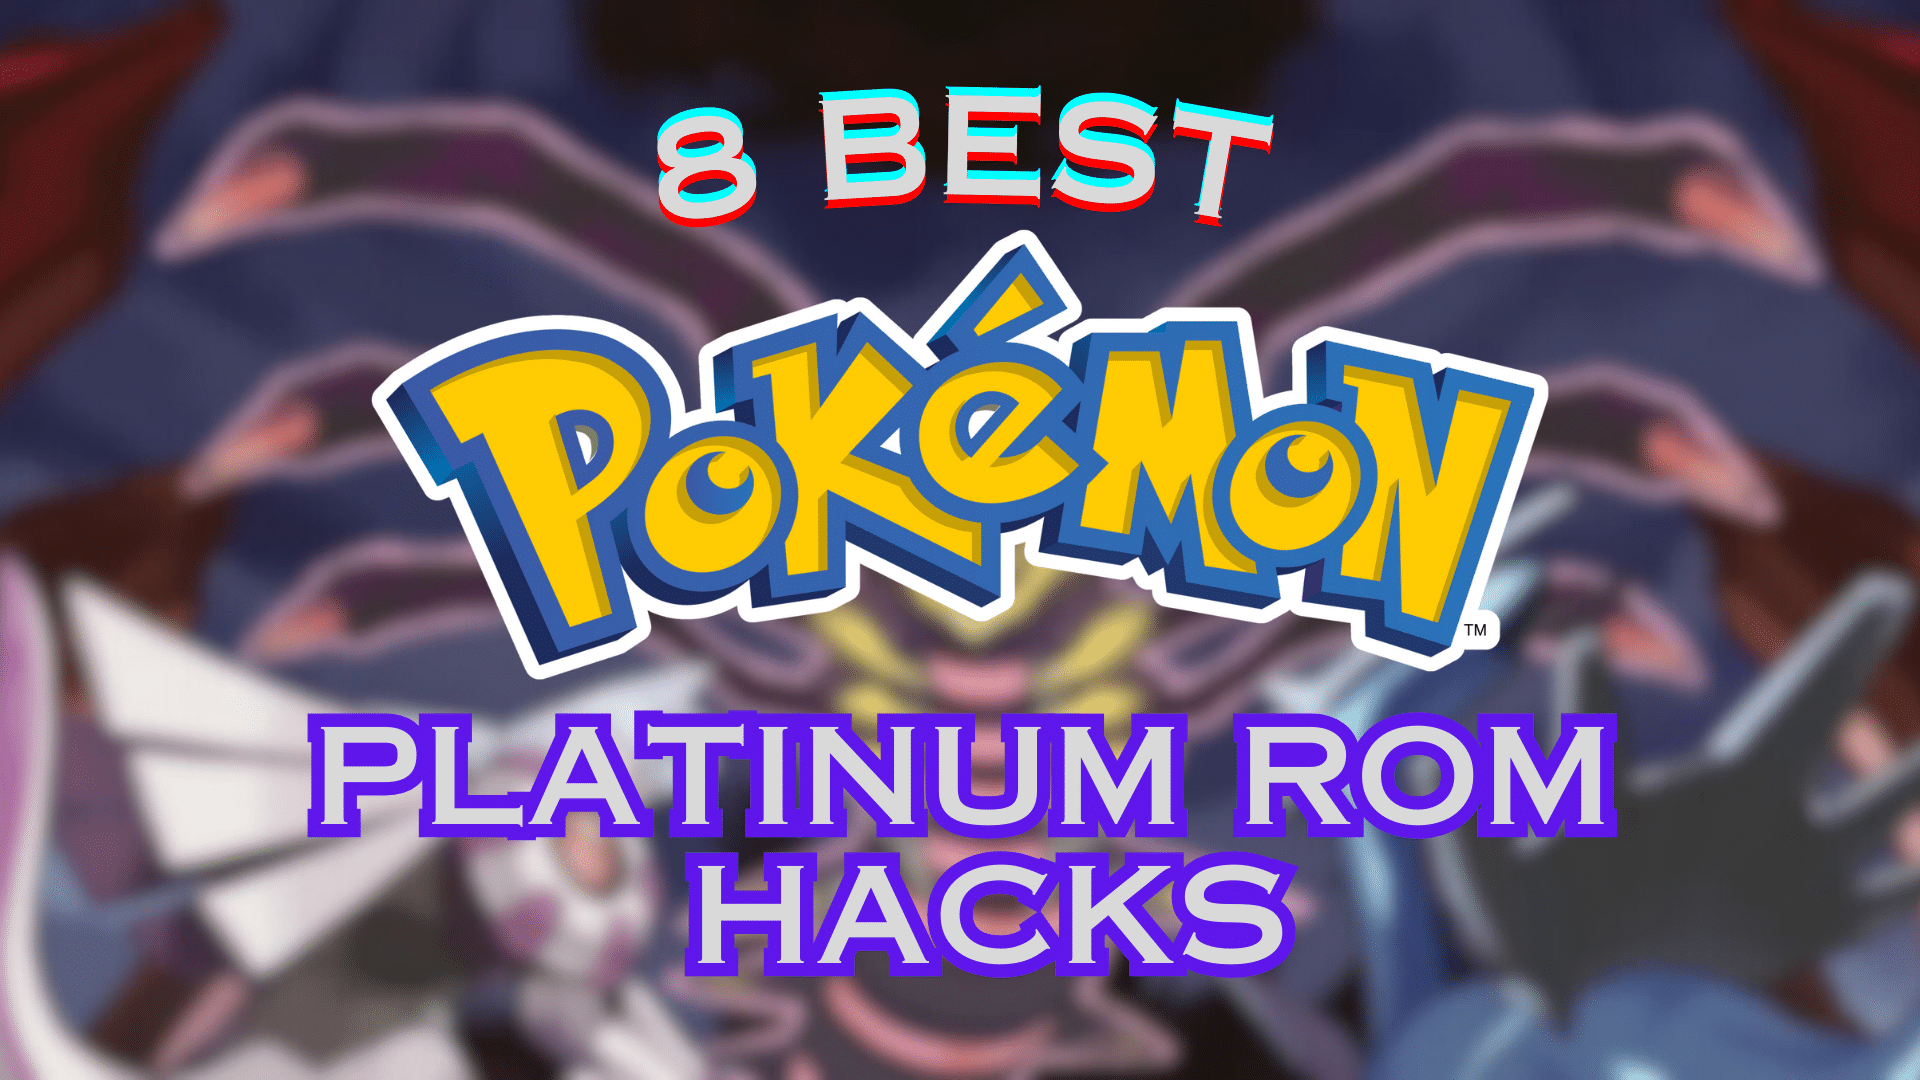 Platinum hack: - Pokémon Platinum Redux